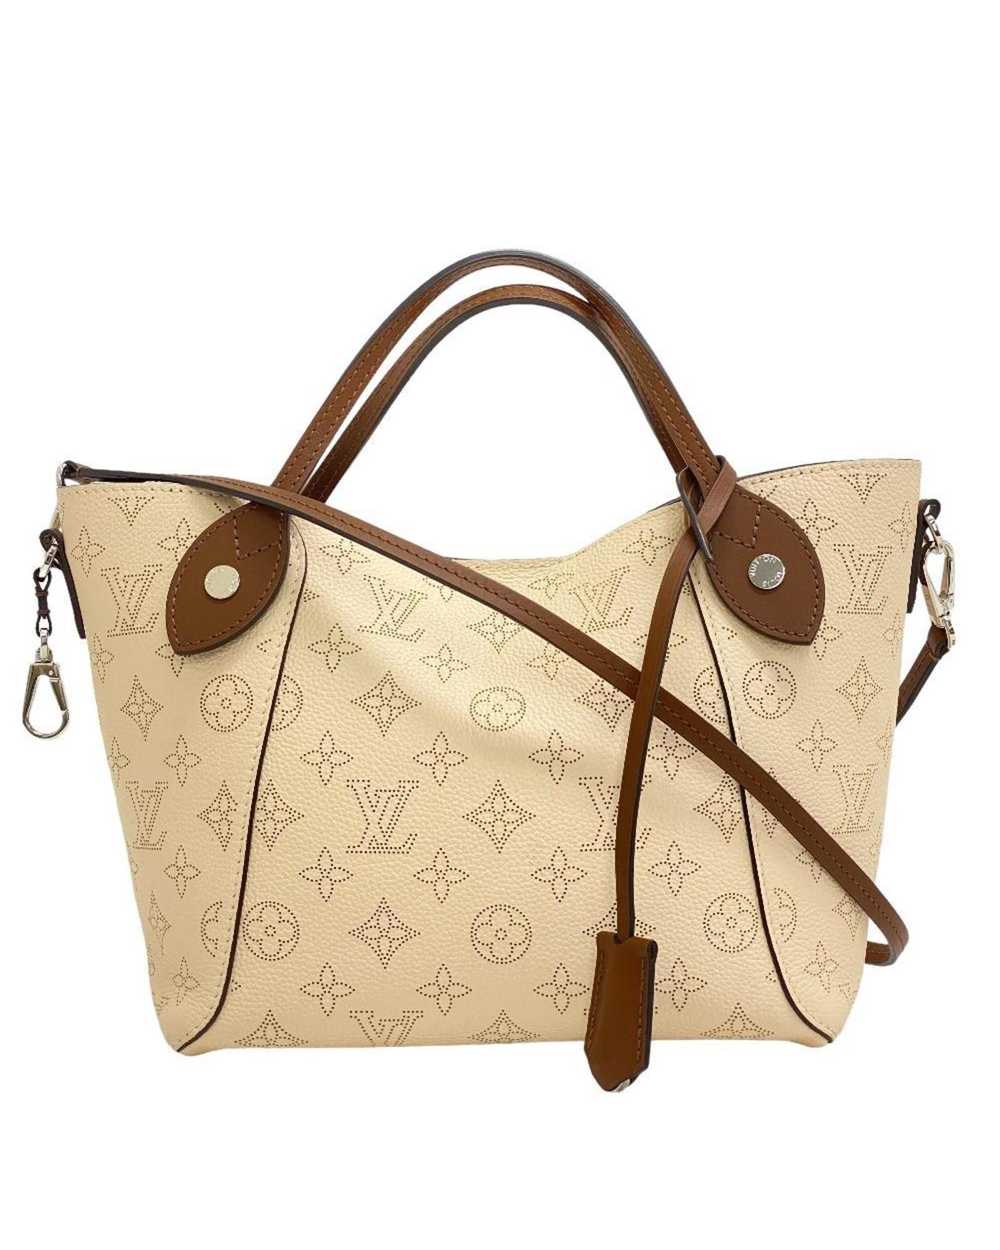 Louis Vuitton Elegant Beige Leather 2-Way Bag wit… - image 1